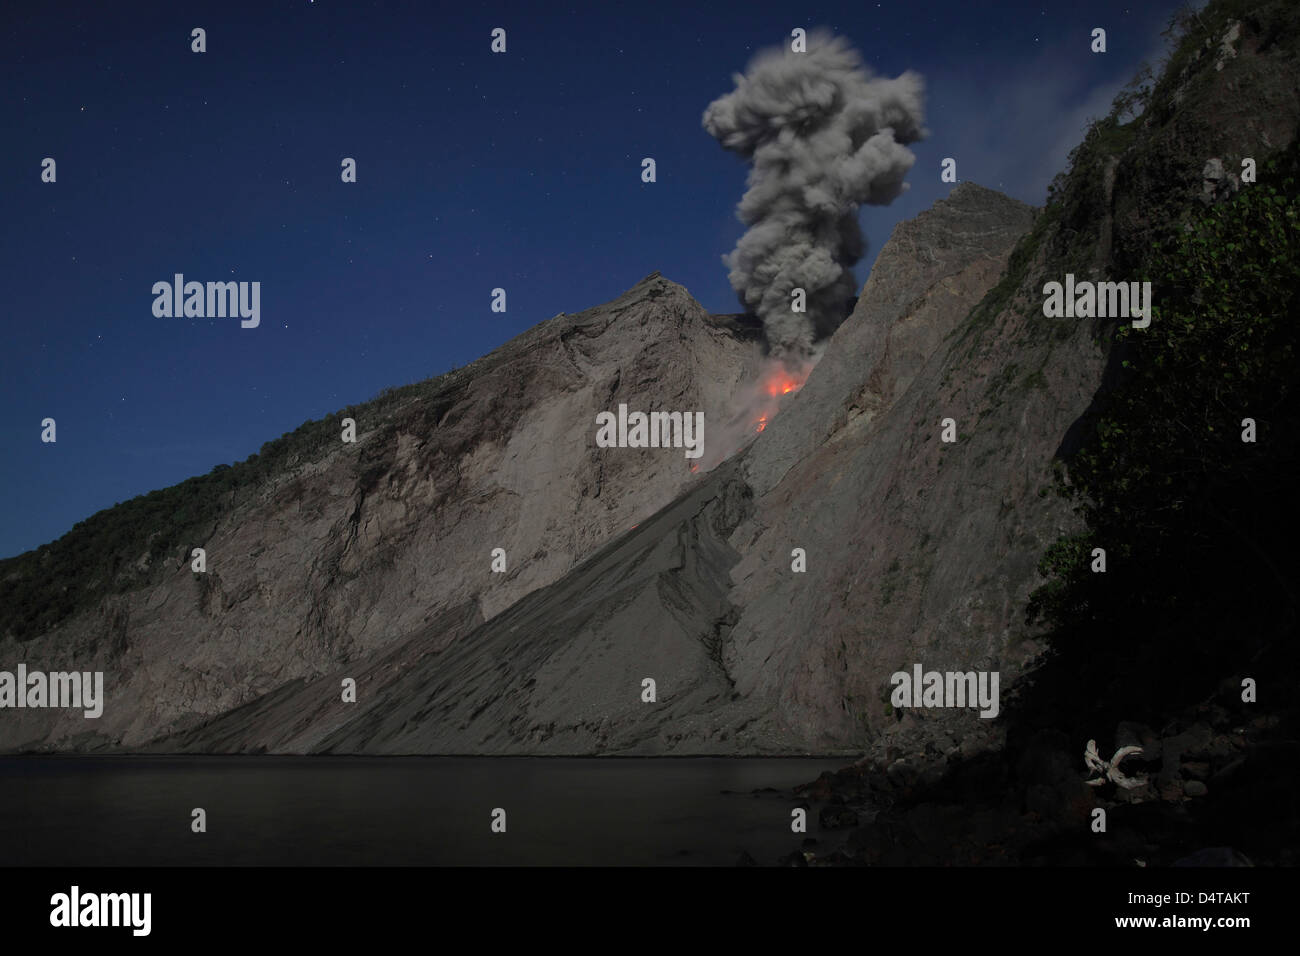 Strombolian type eruption of Batu Tara volcano, Indonesia. Stock Photo